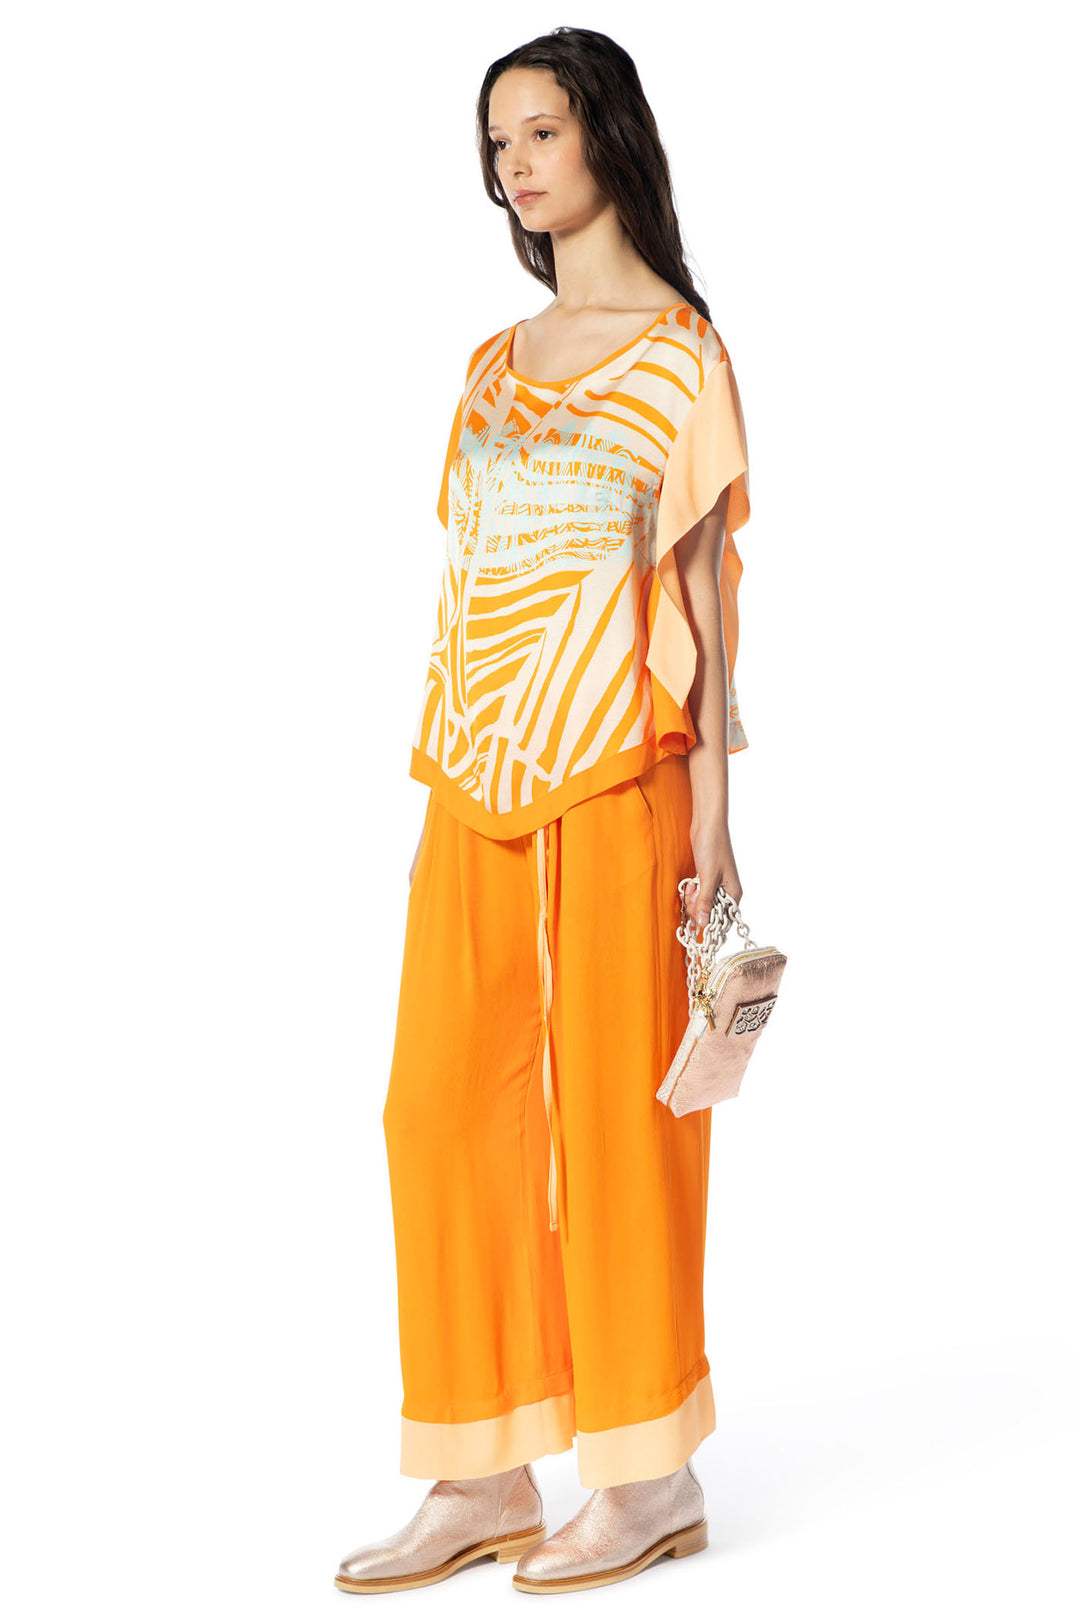 Elisa Cavaletti ELP245012706 Orange Palm Print Top - Experience Boutique